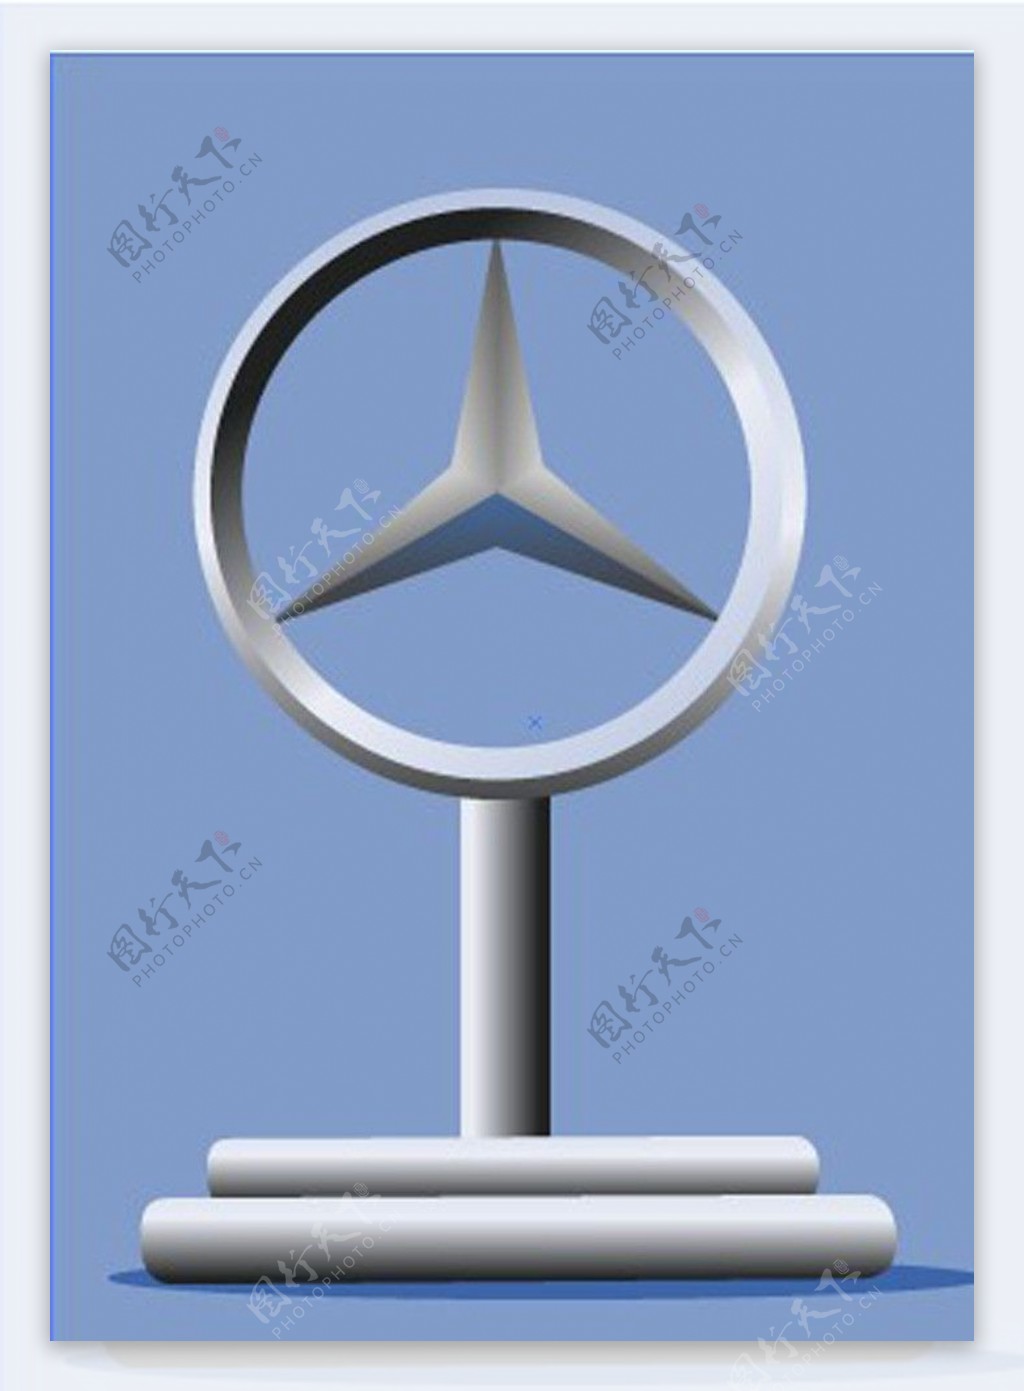 Mercedes-Benz Phone Wallpapers - Top Free Mercedes-Benz Phone ...